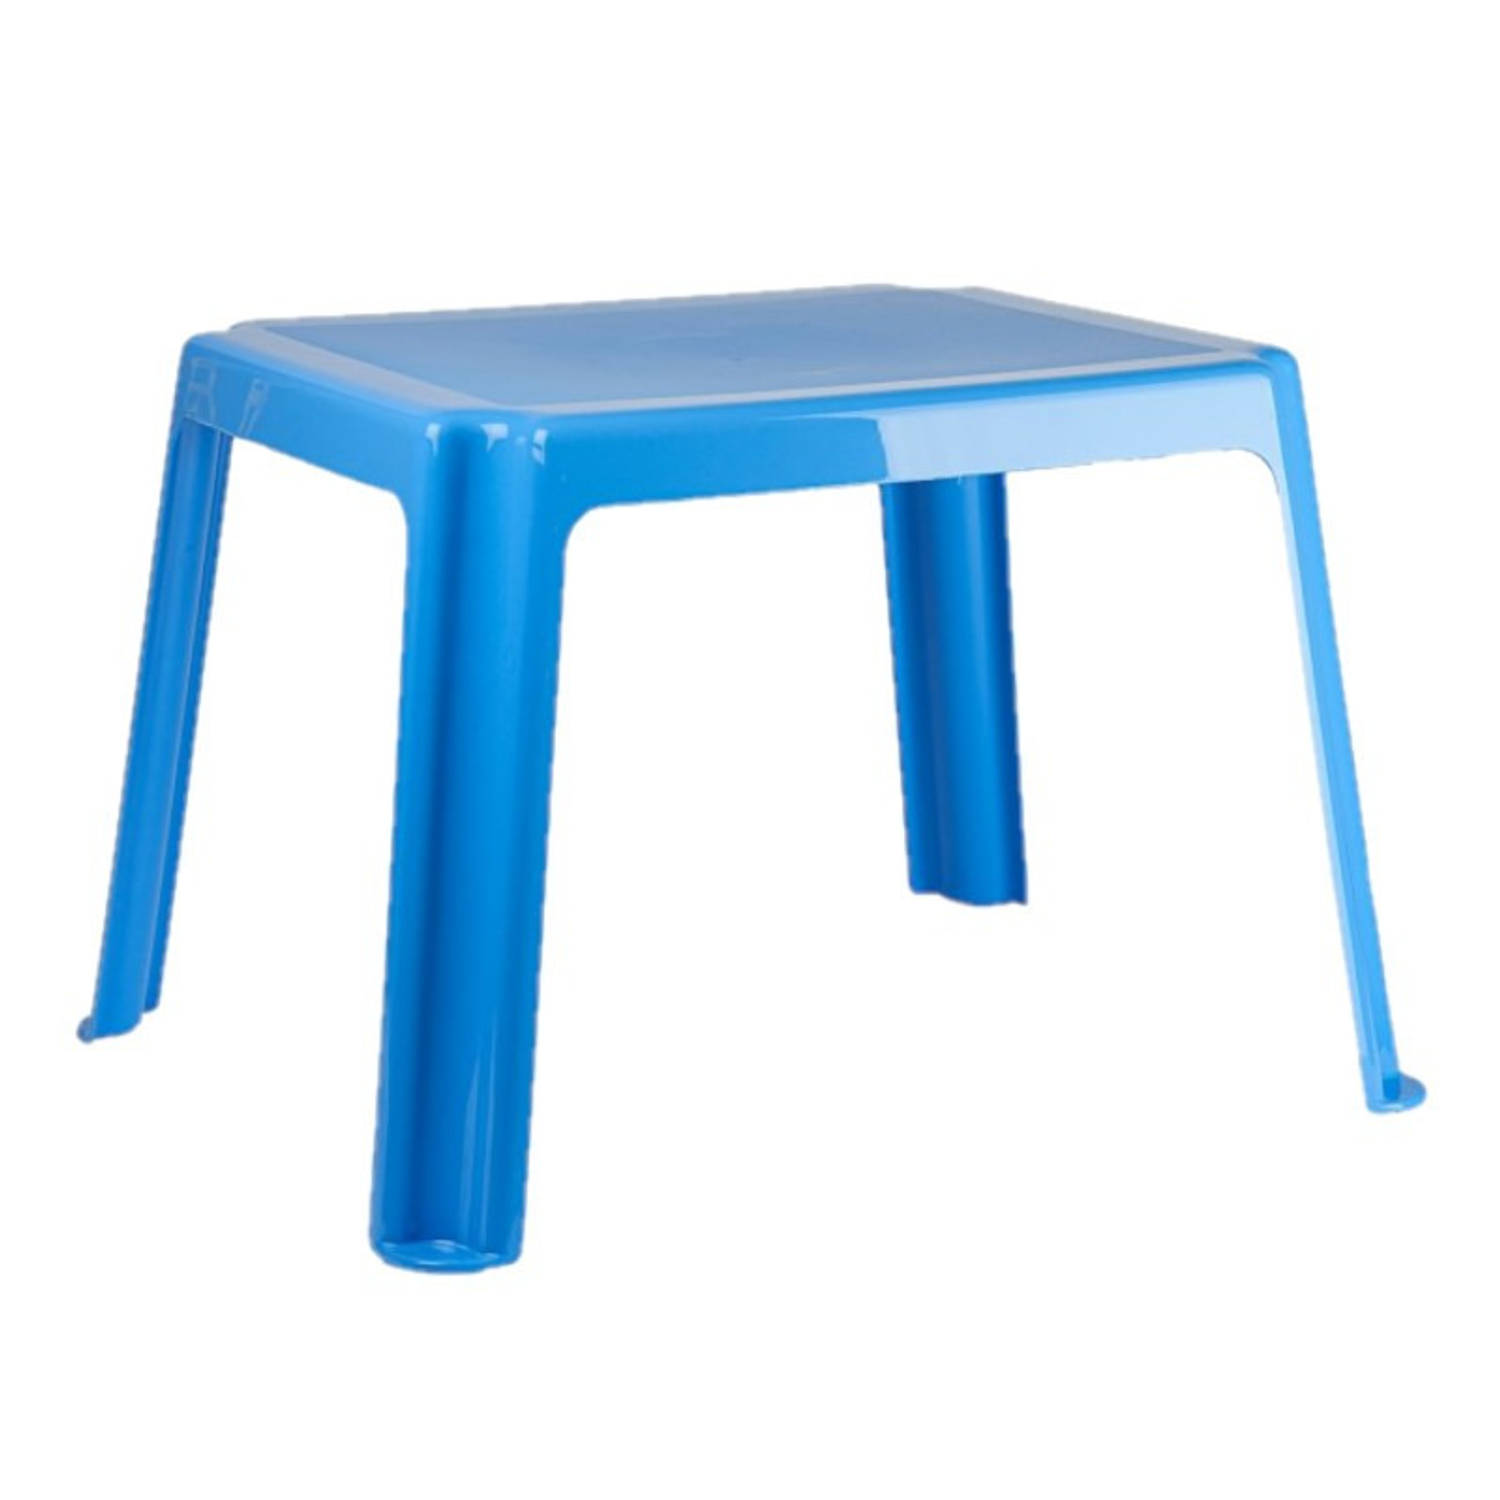 Kunststof kindertafel blauw 55 x 66 x 43 cm - Bijzettafels